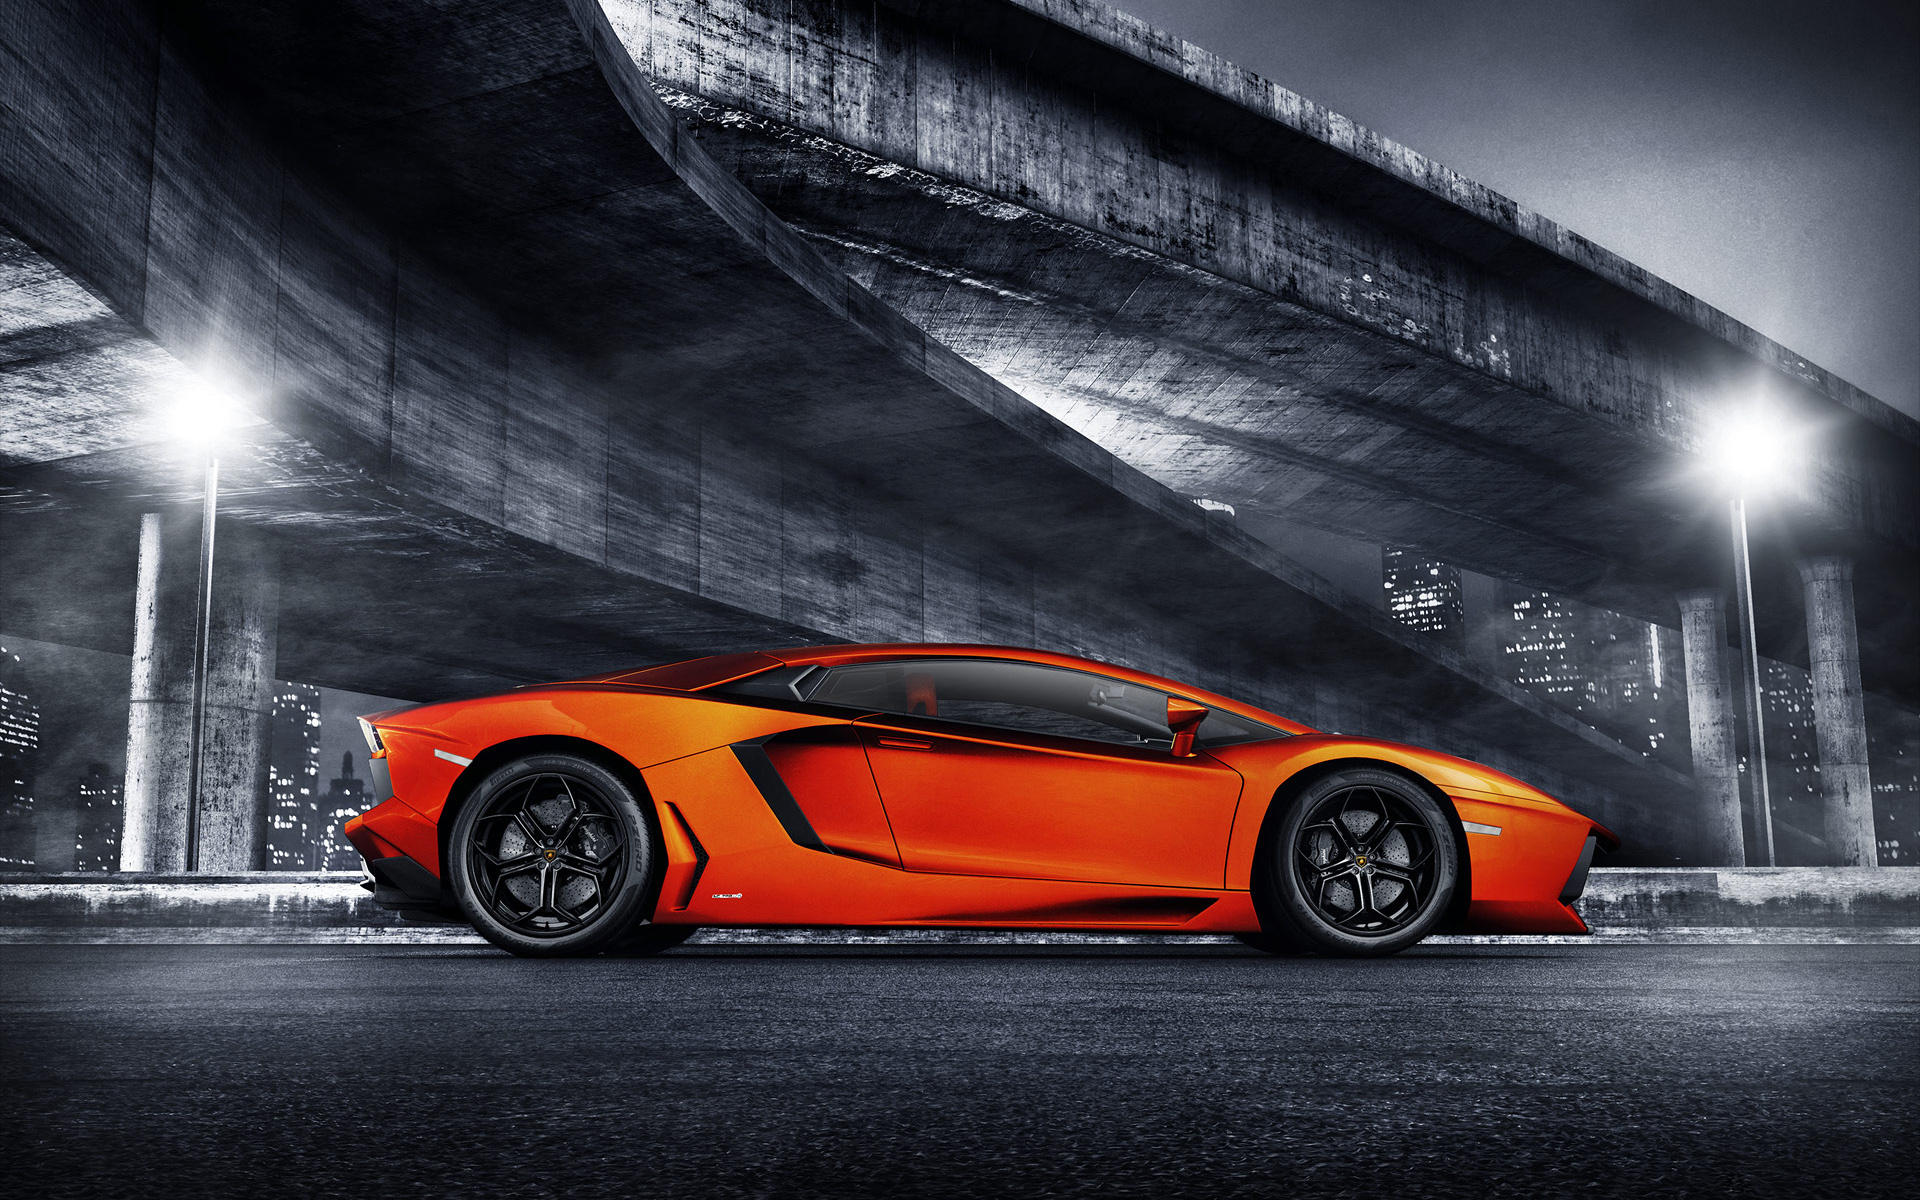 Lamborghini Aventador Sports Car - Wallpaper, High ...